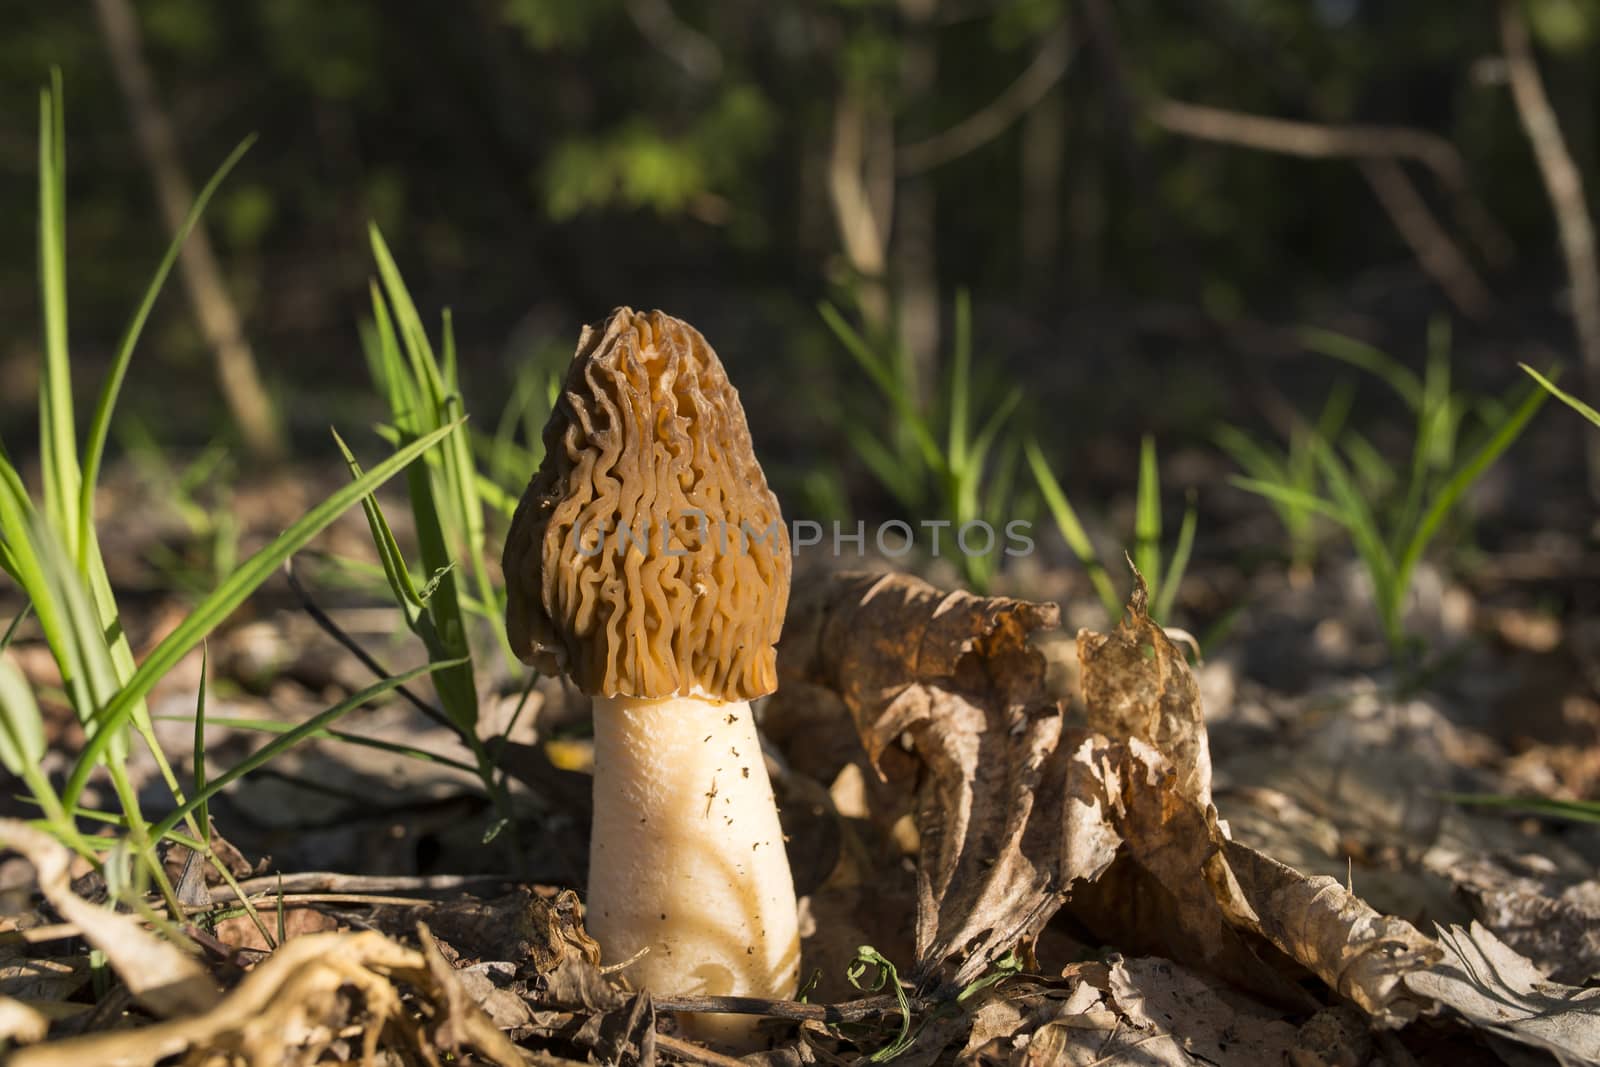 Morel - morchella, edible mushroom. Spring grass. Verpa bohemica by 977_ReX_977